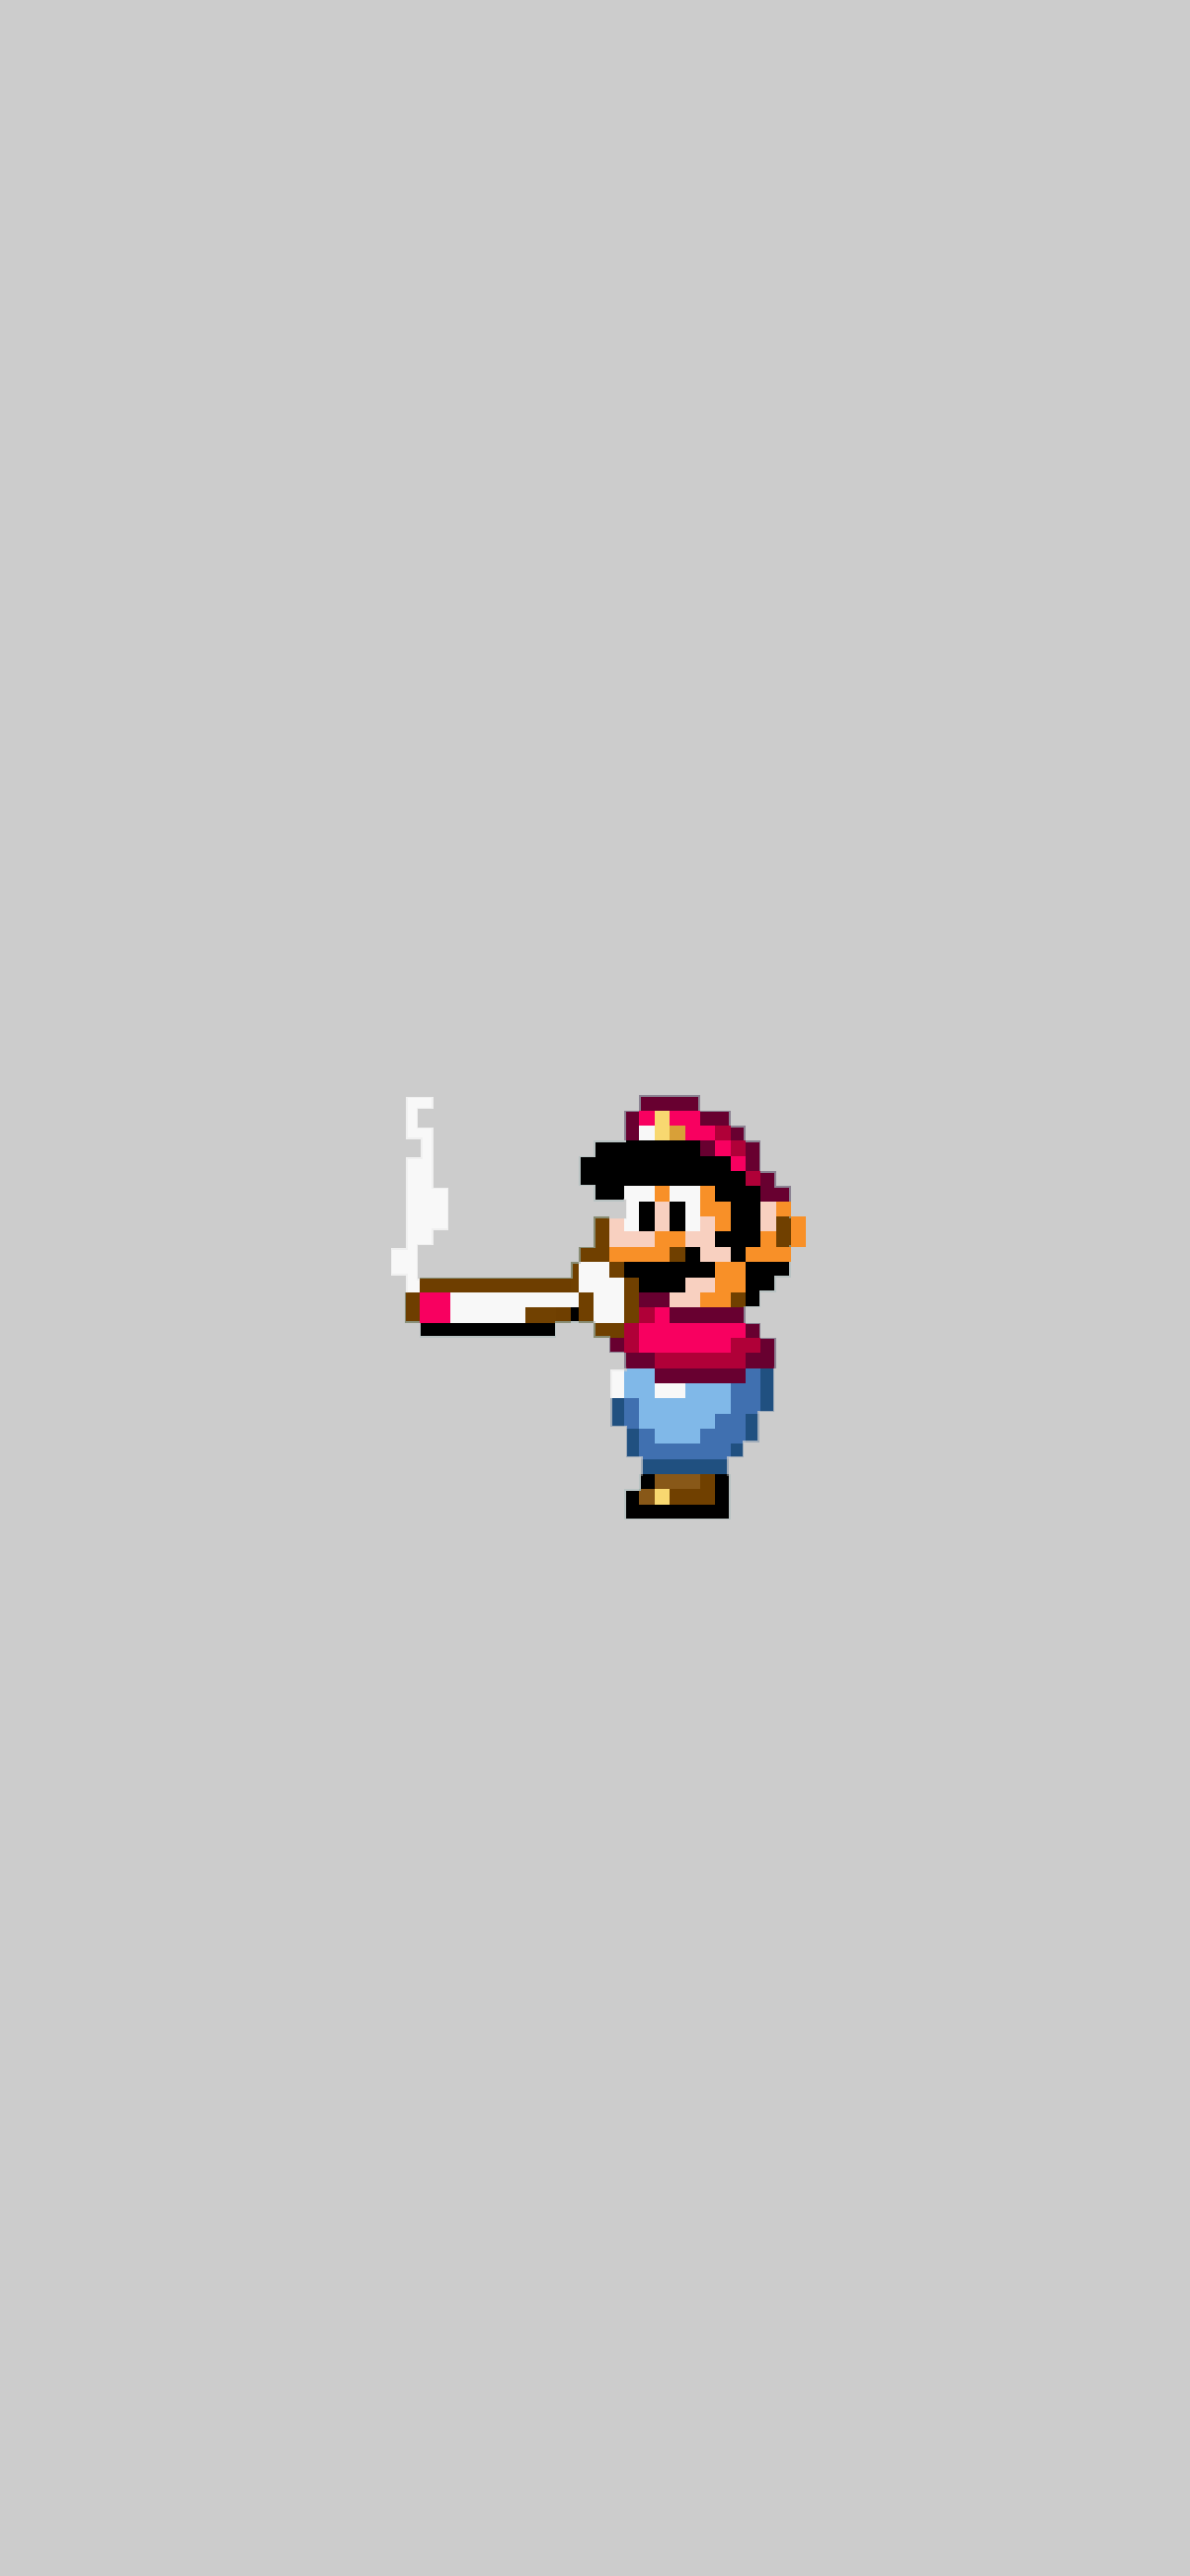 Mario holding a lit cigarette - 